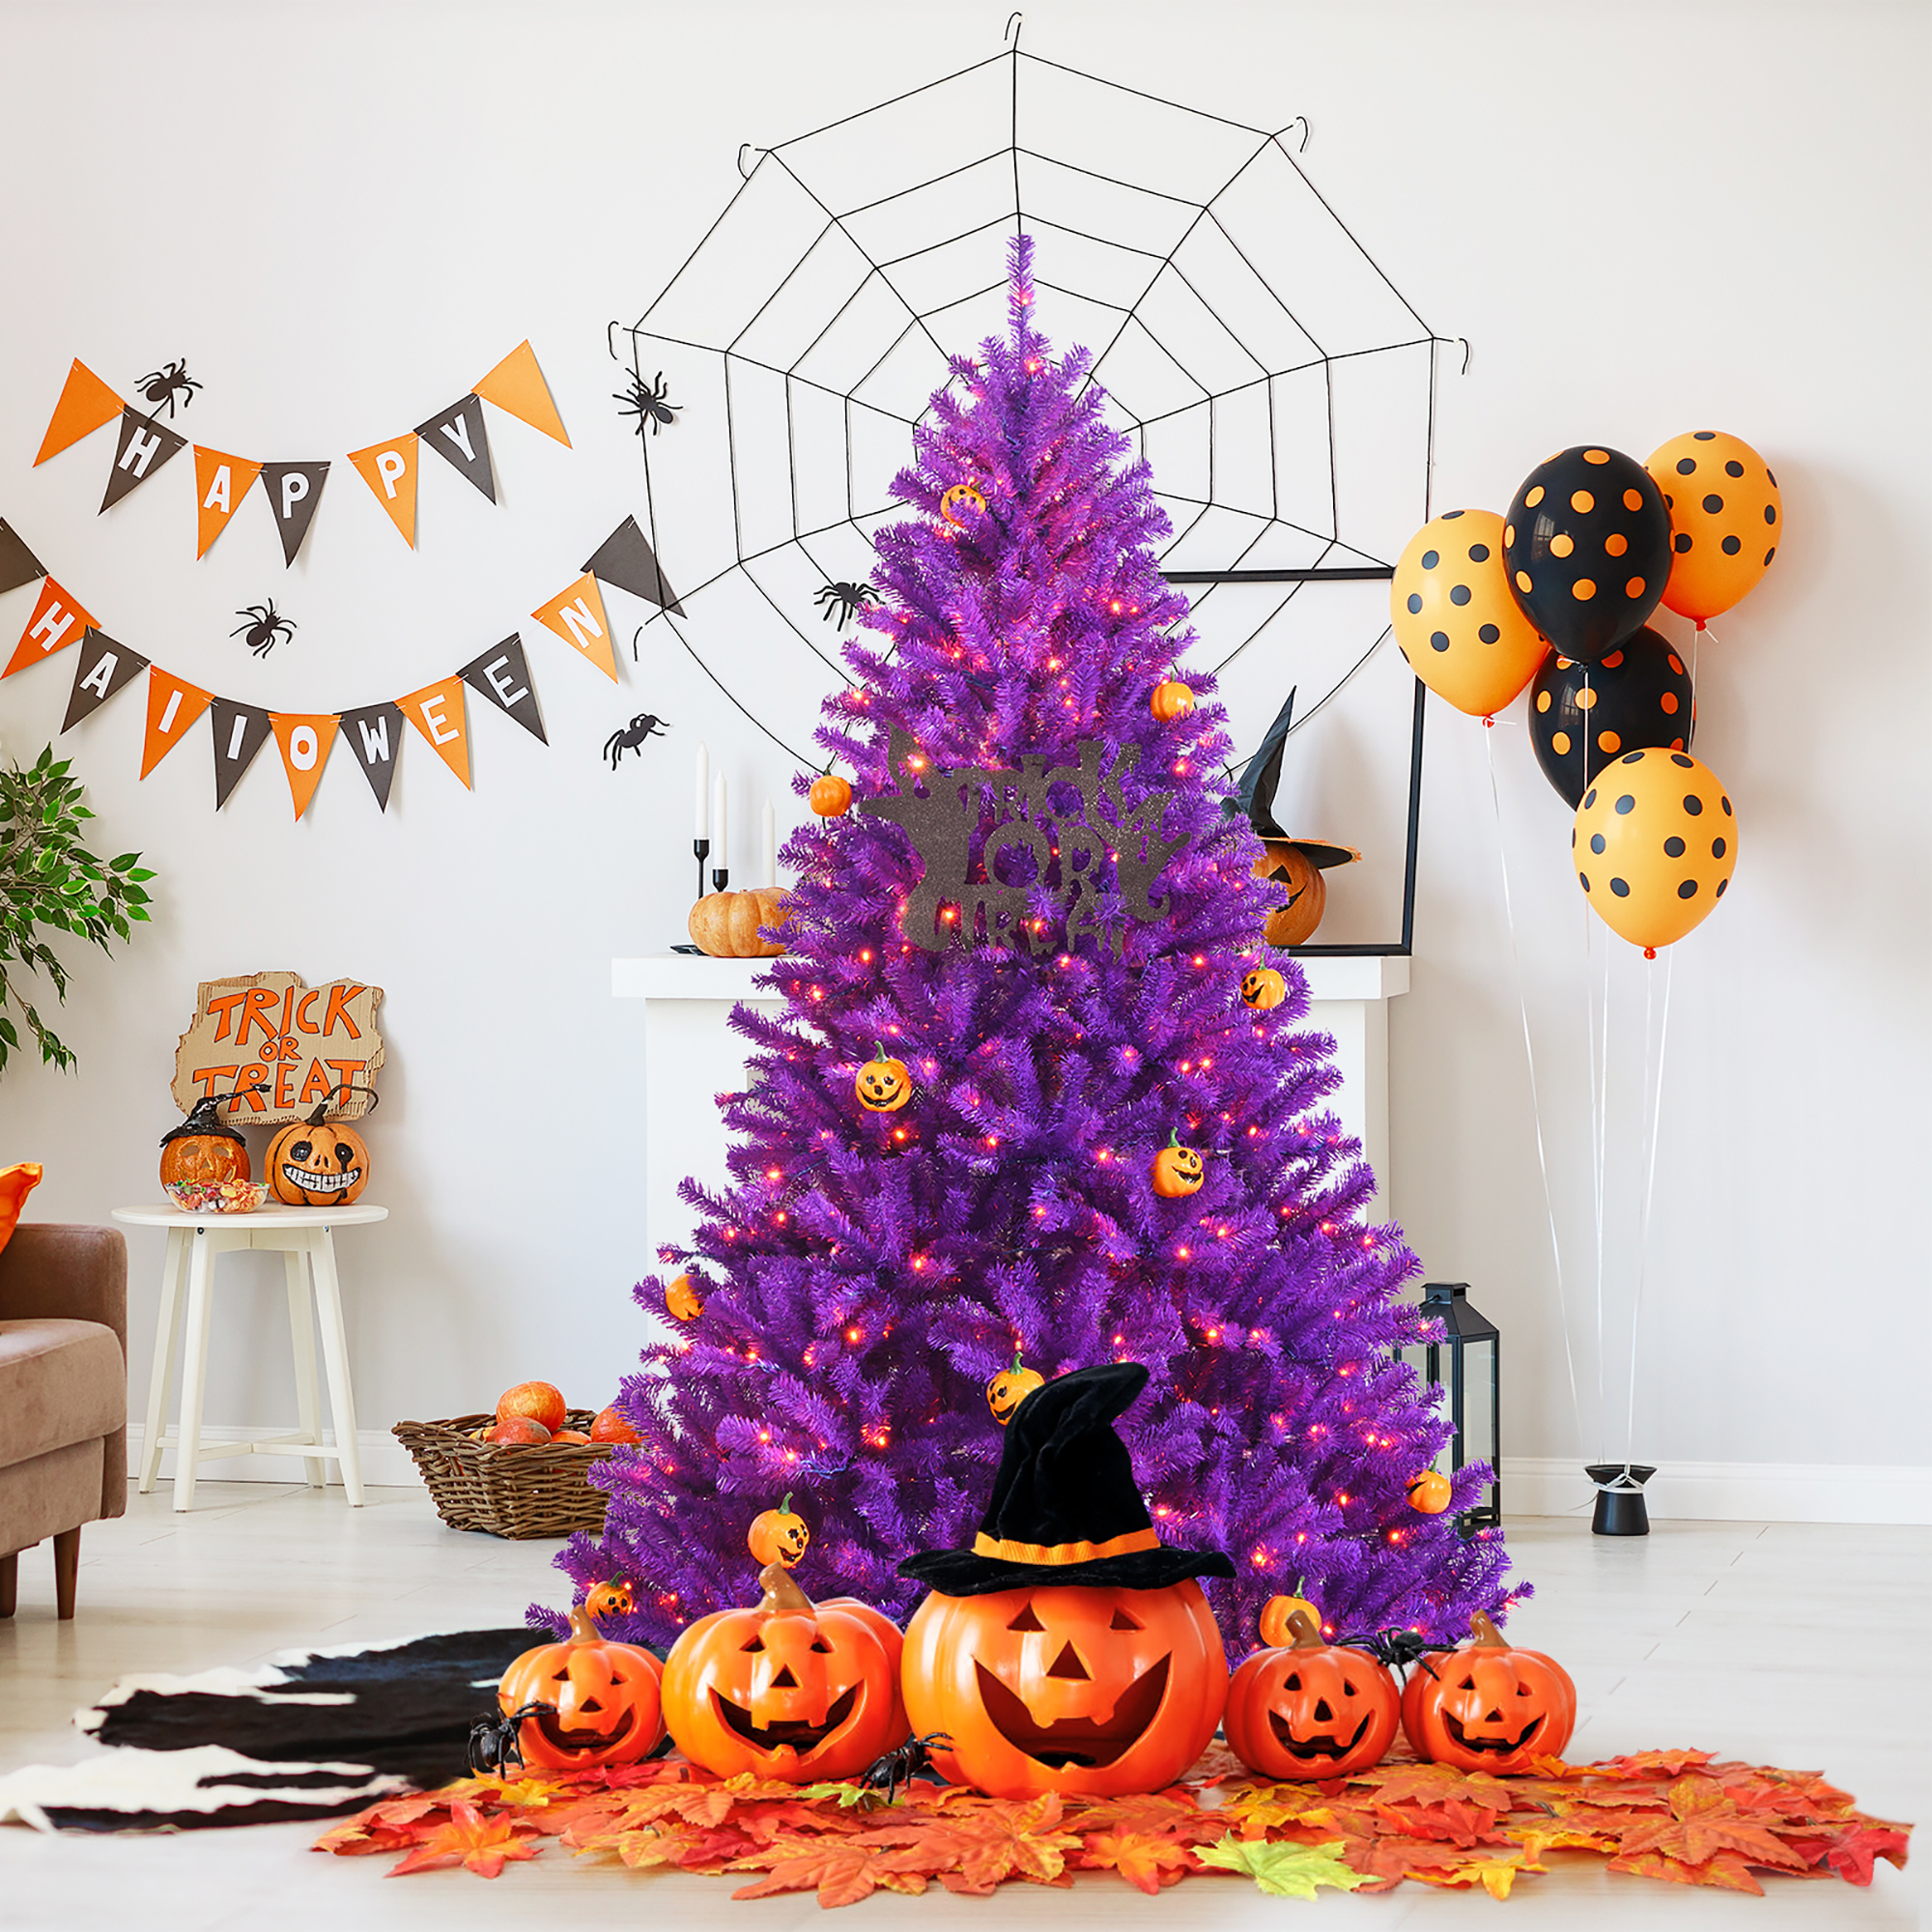 6ft Pre-lit Purple Halloween Christmas Tree w/ Orange Lights Pumpkin Decorations - image 3 of 10